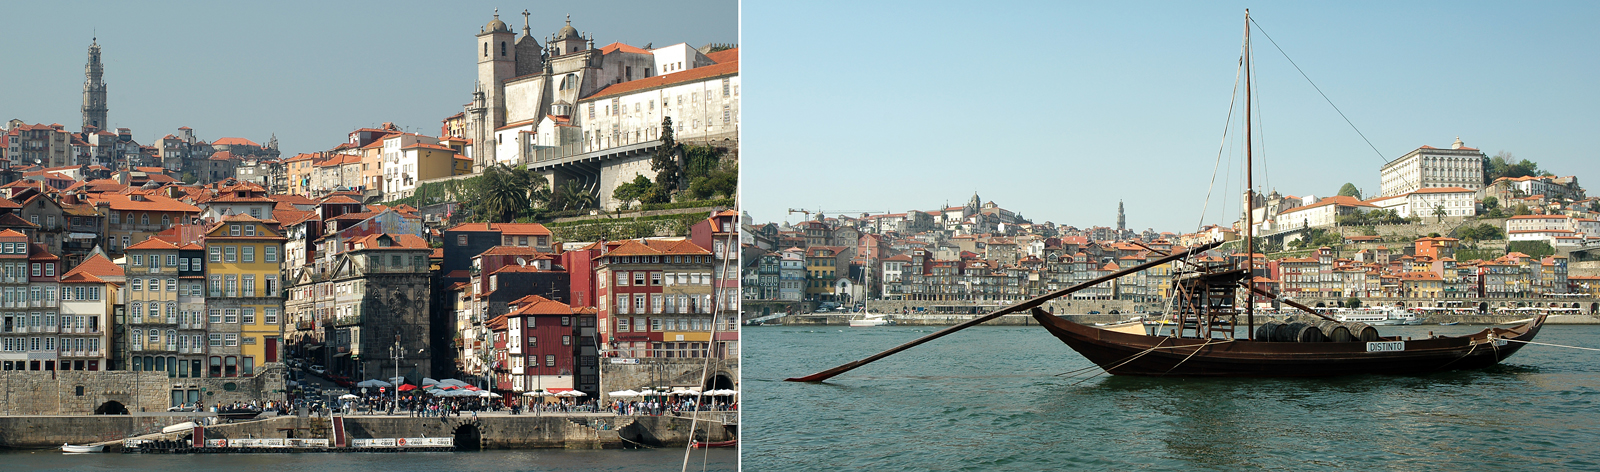 Images of Porto